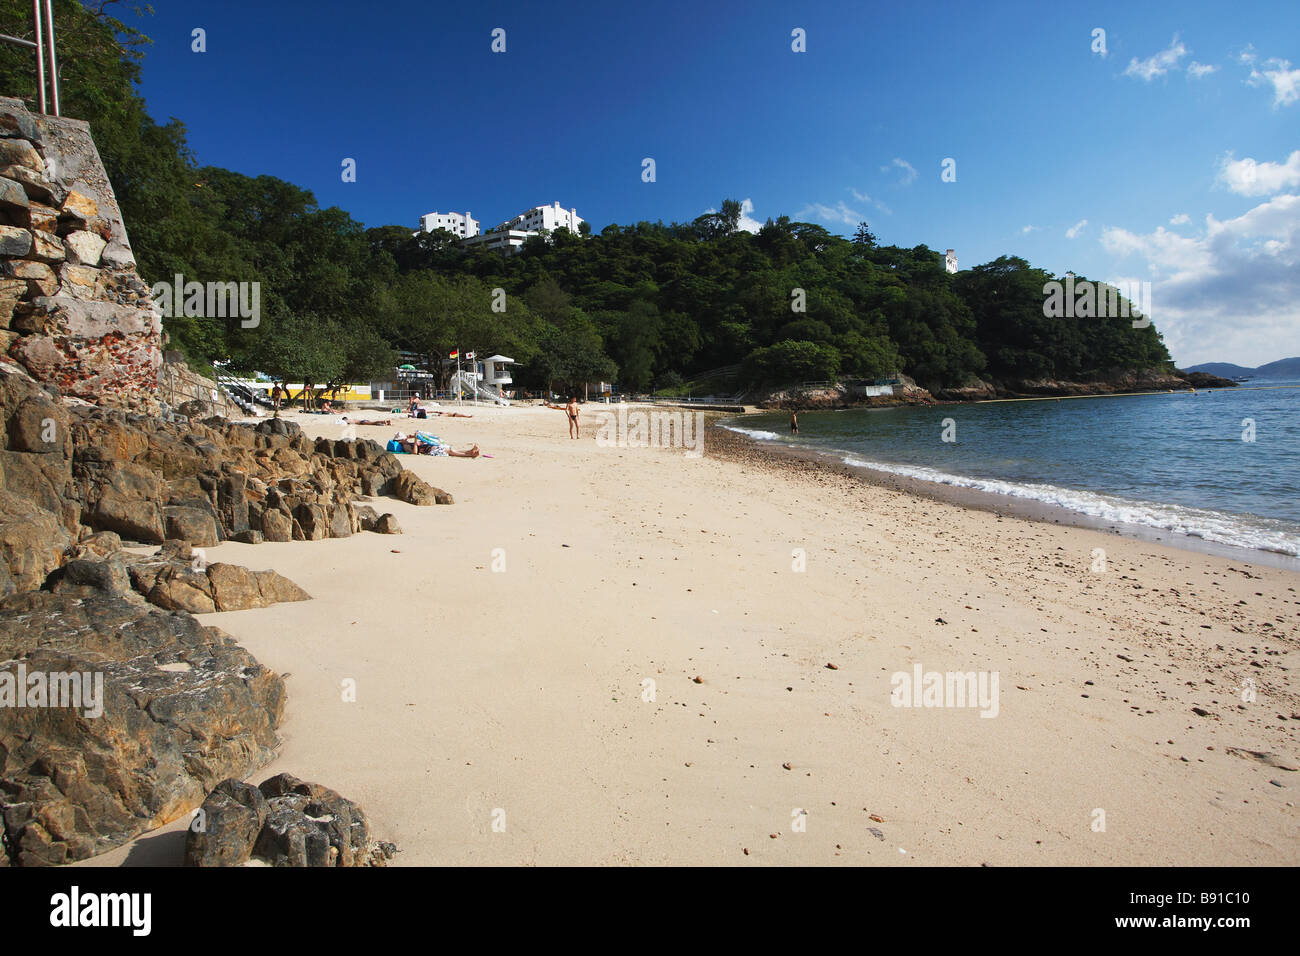 Middle Bay Beach, Repulse Bay, Hong Kong Stock Photo